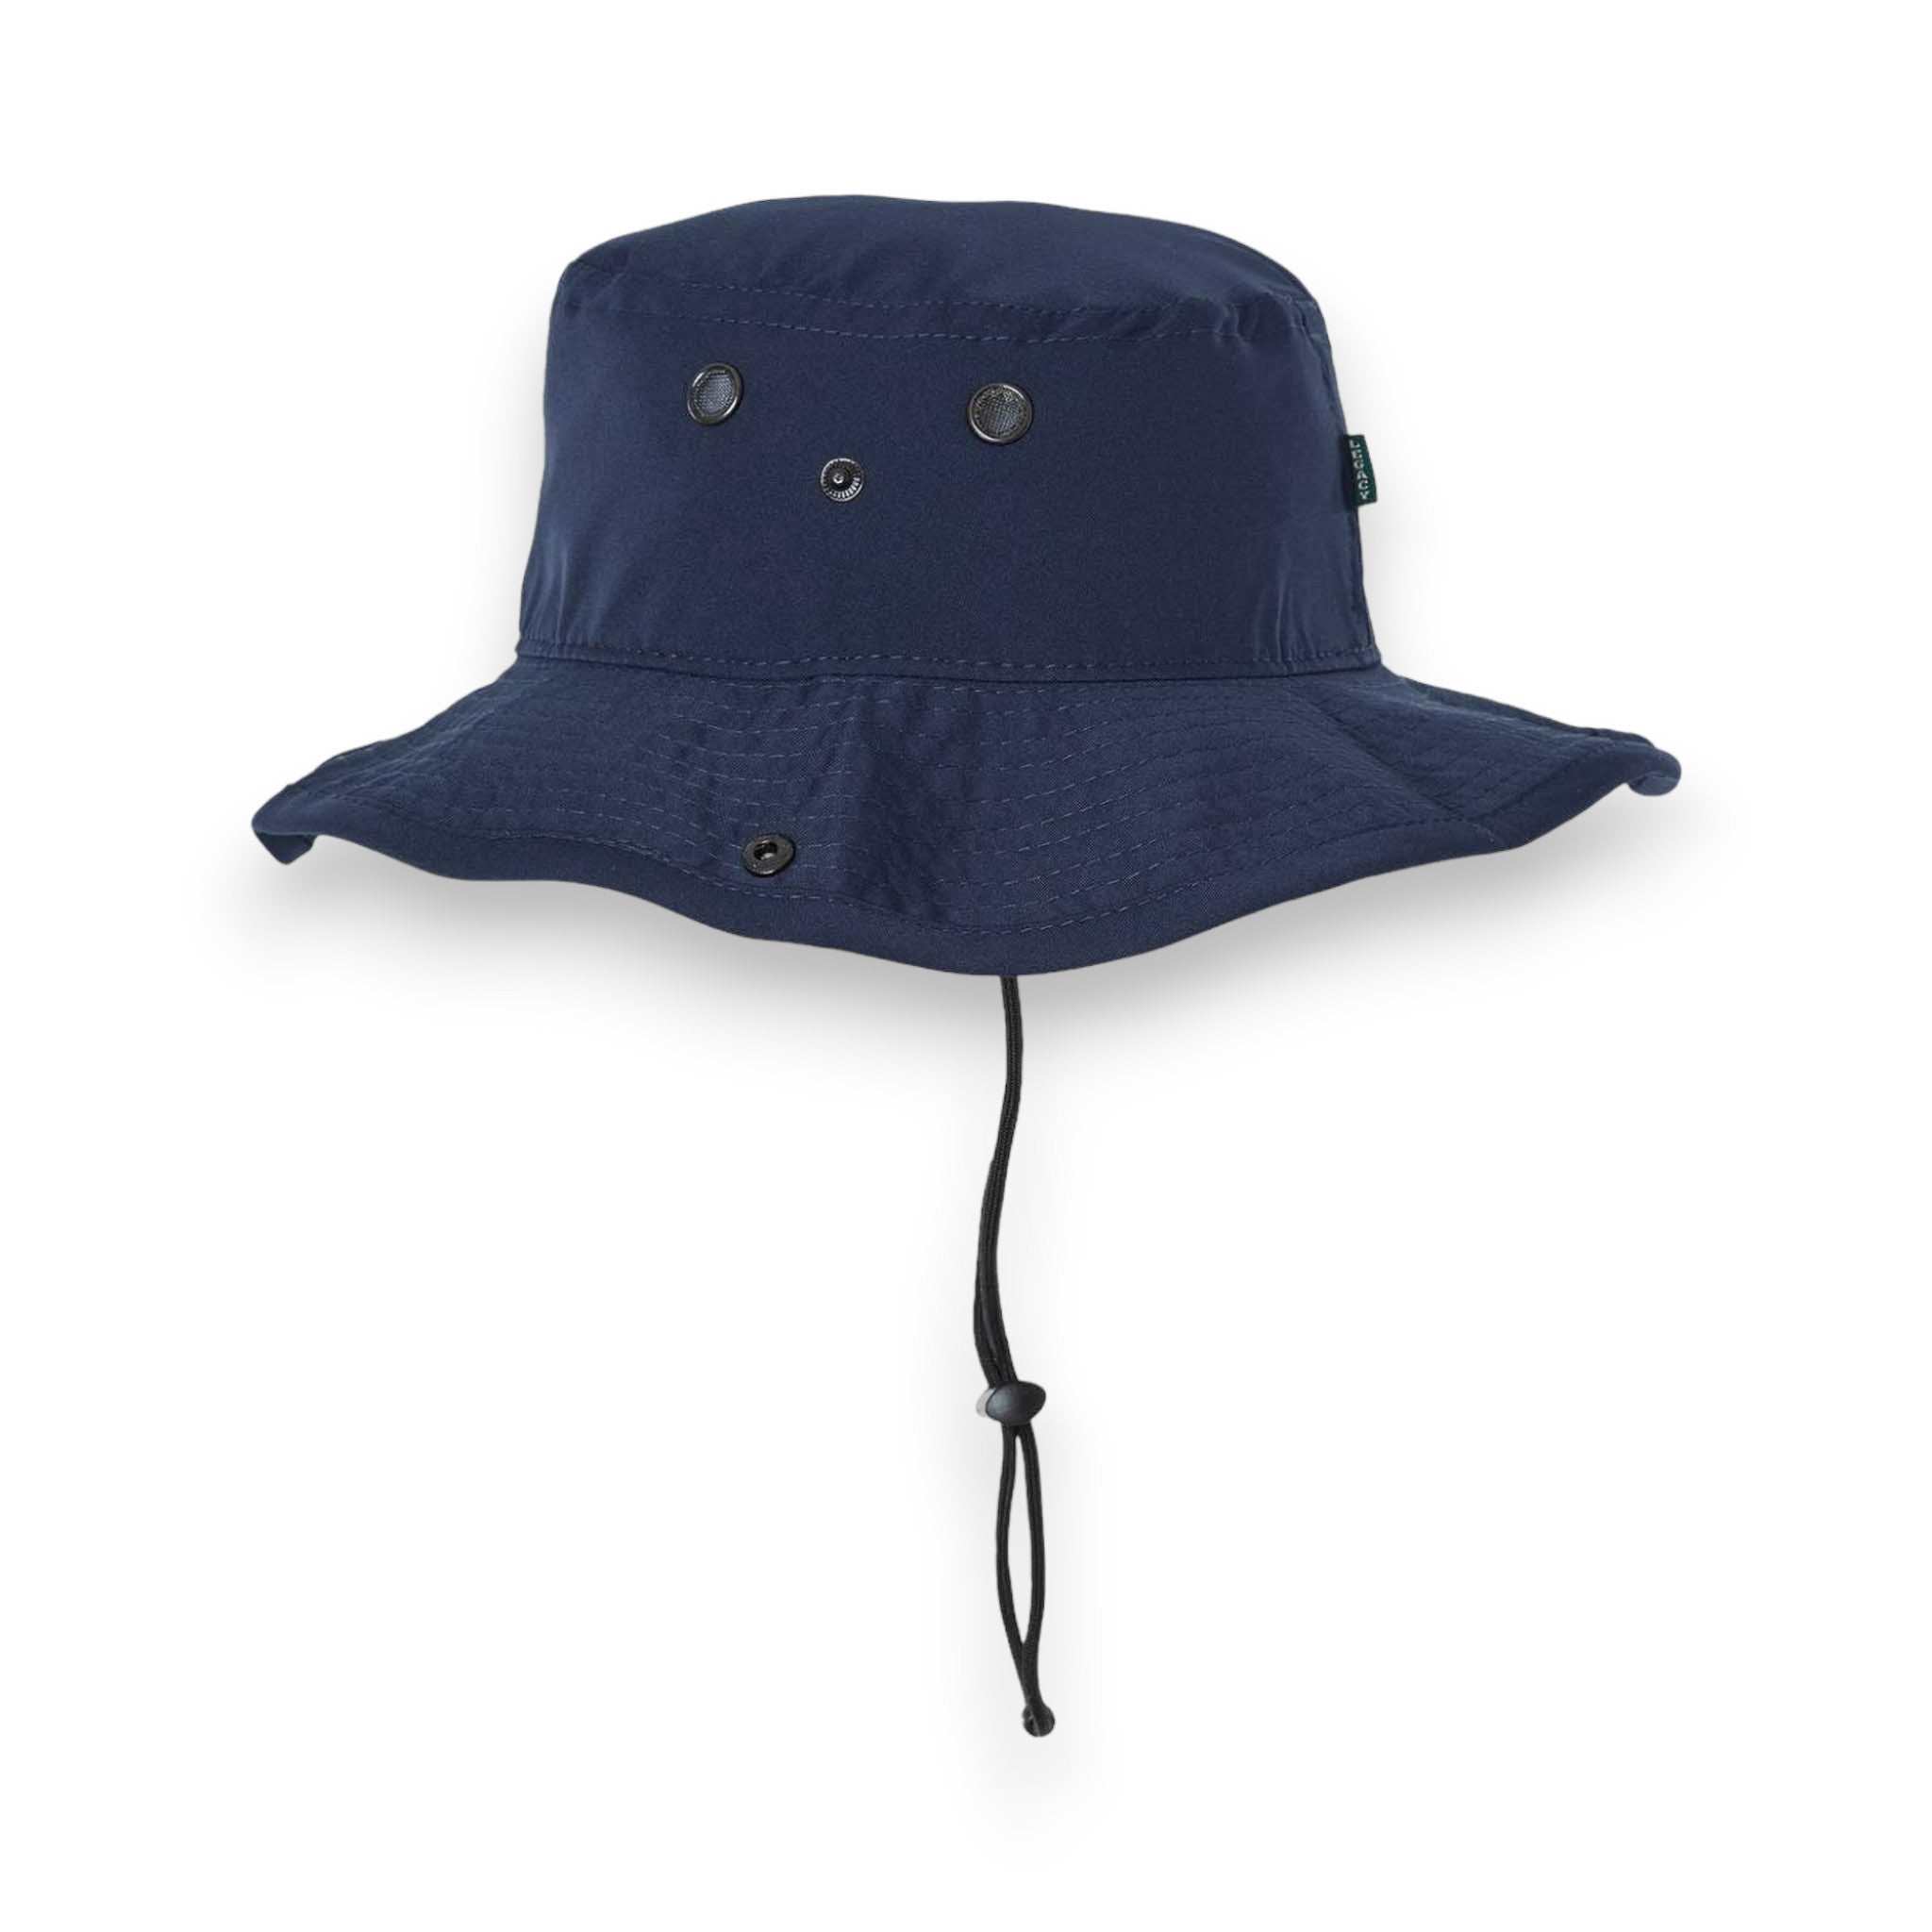 Side view of LEGACY CFB custom hat in navy